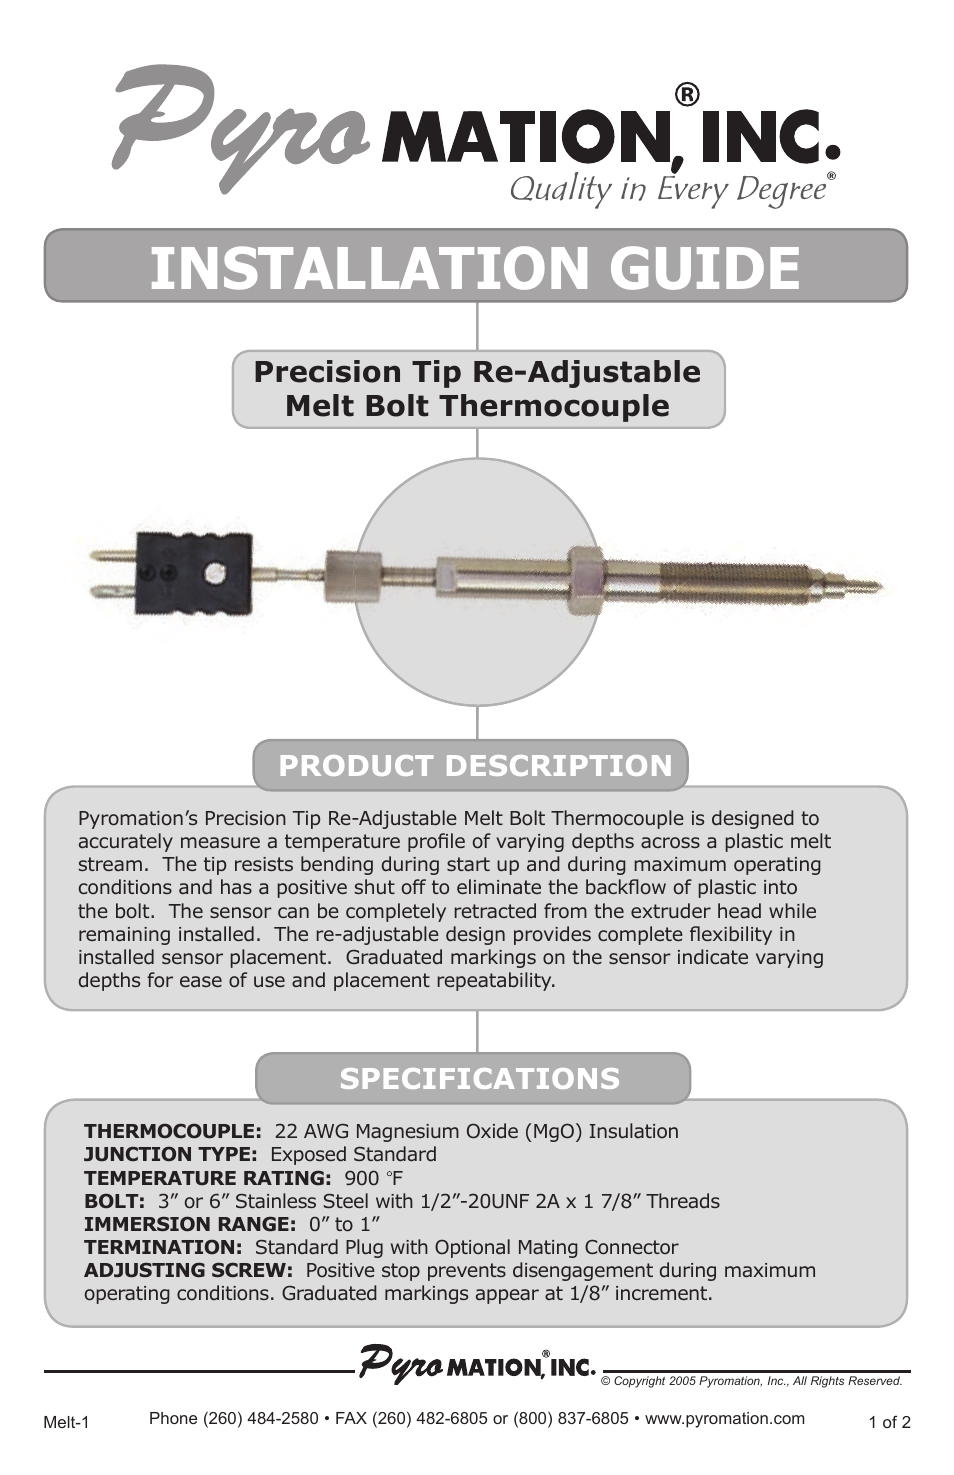 Precision Tip Re-Adjustable Melt Bolt Thermocouple